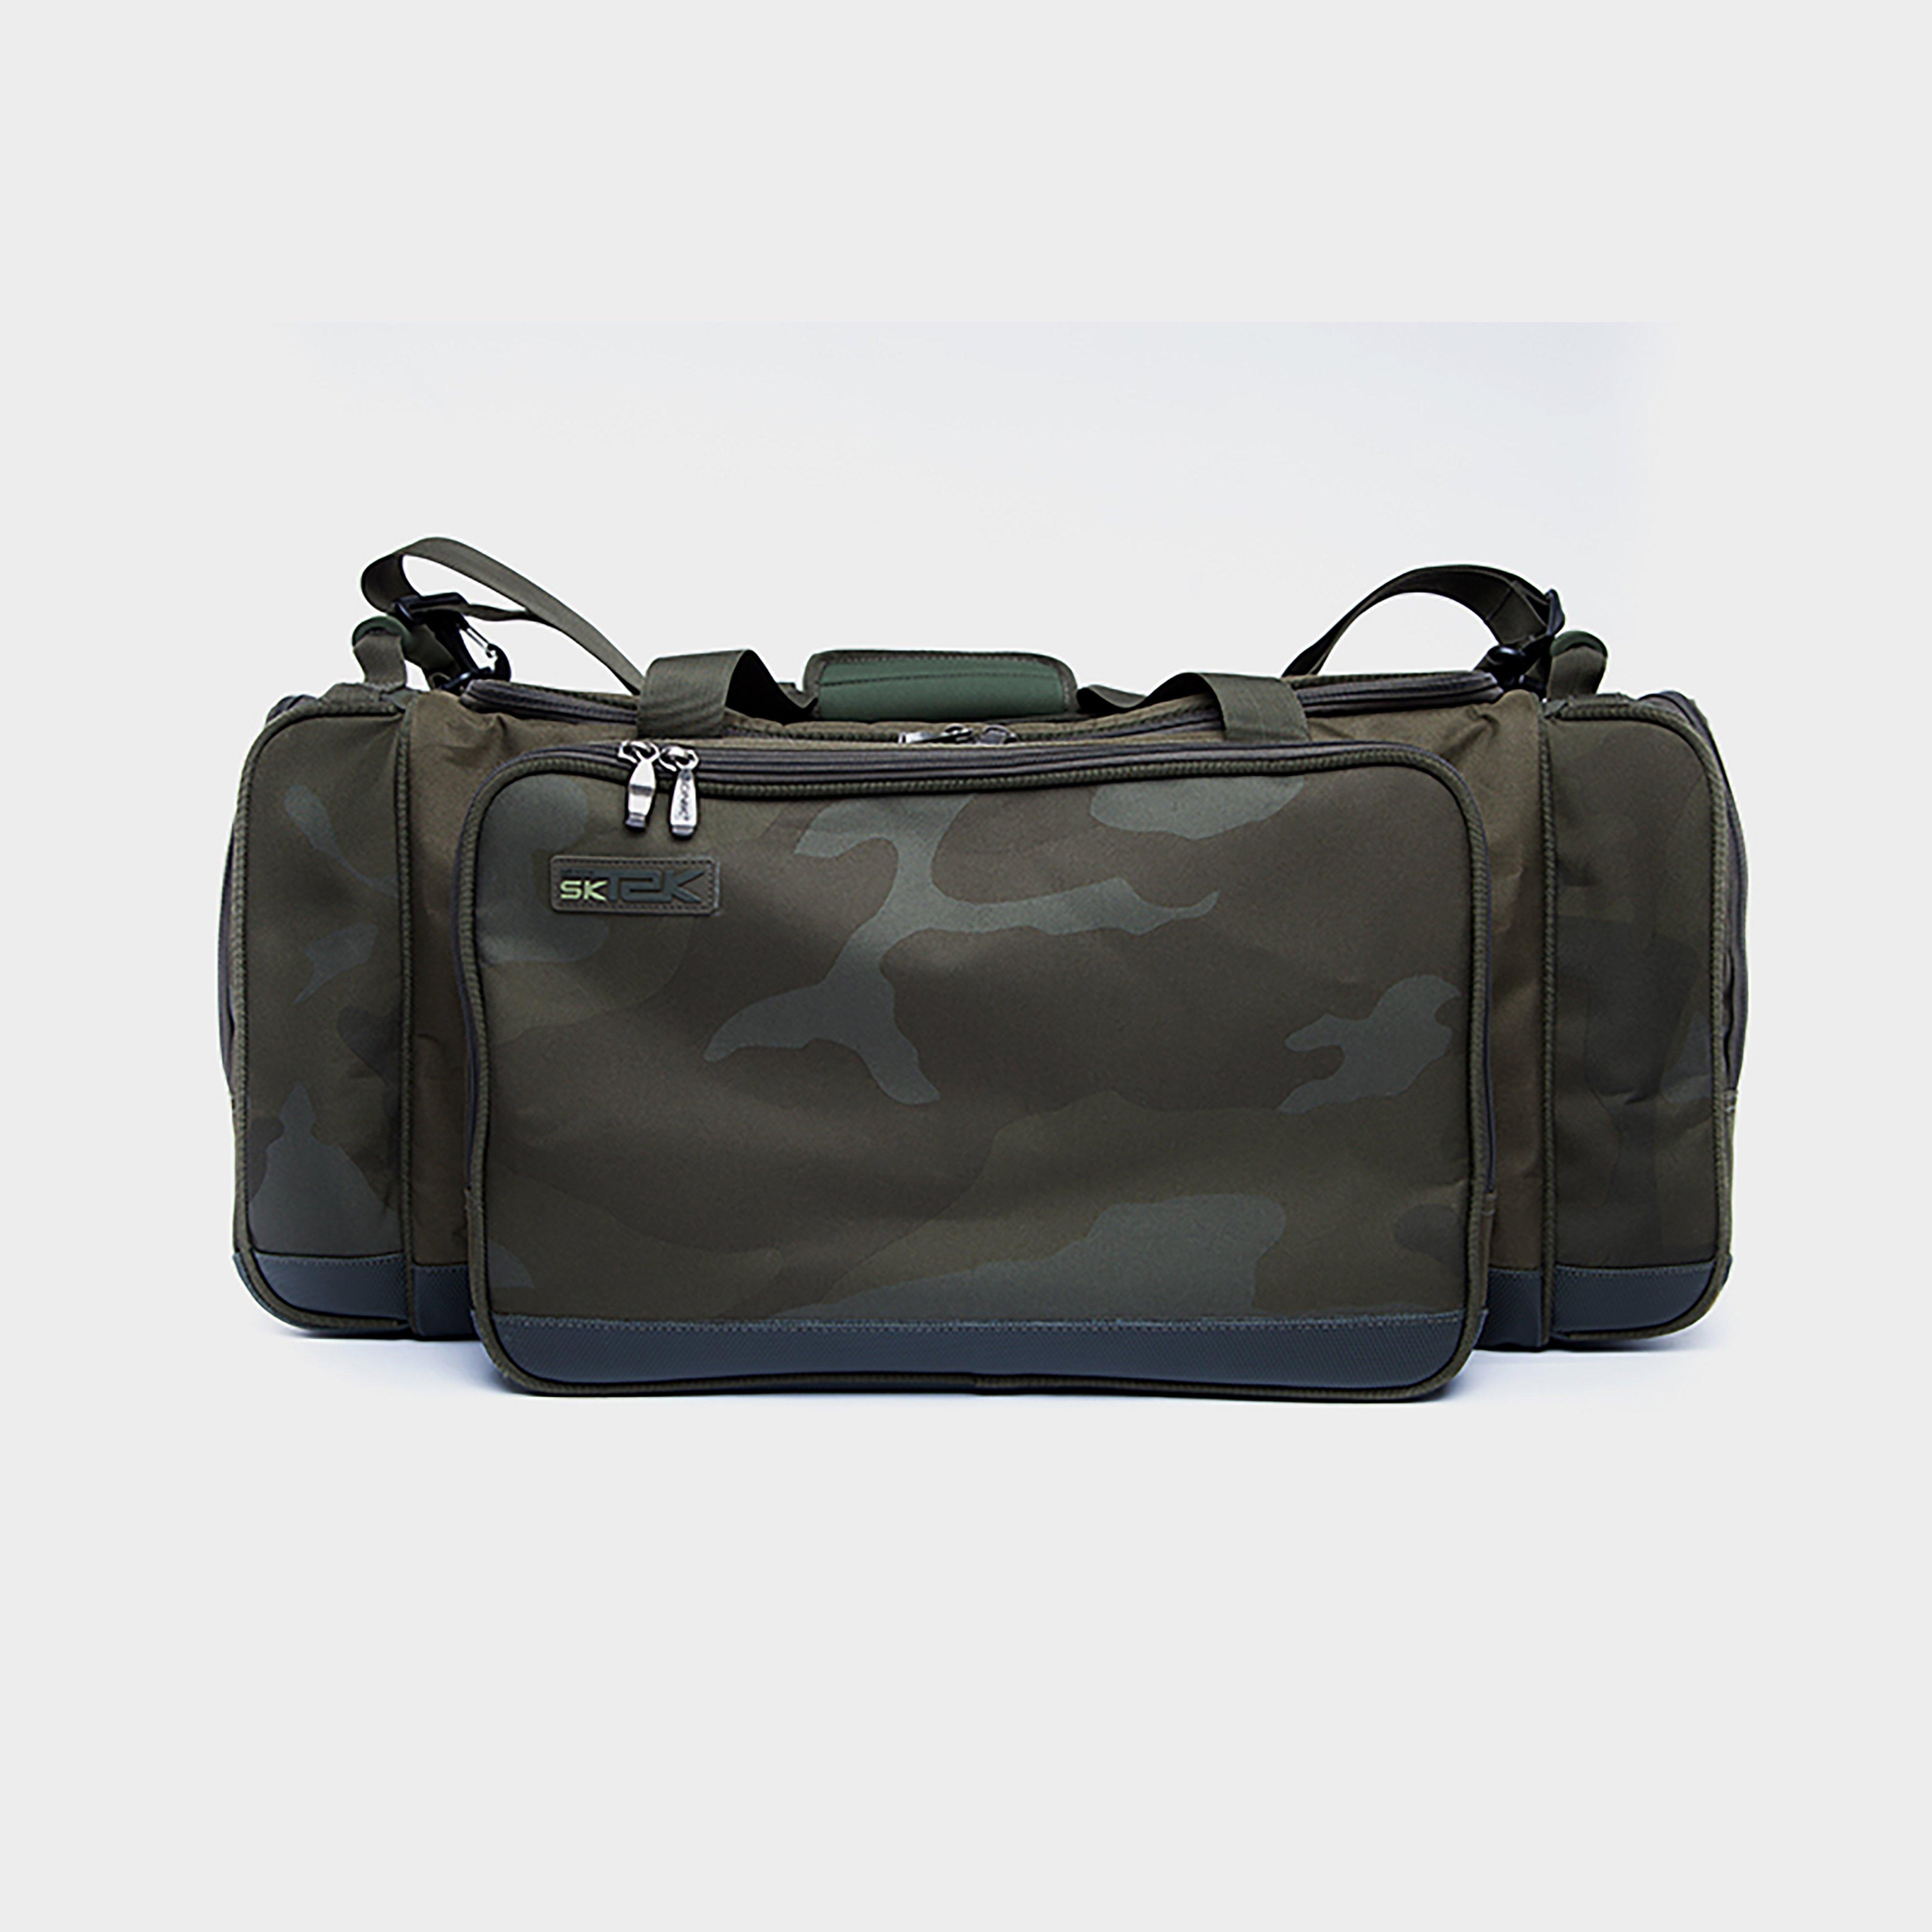 Sonik Carp Luggage & Bags